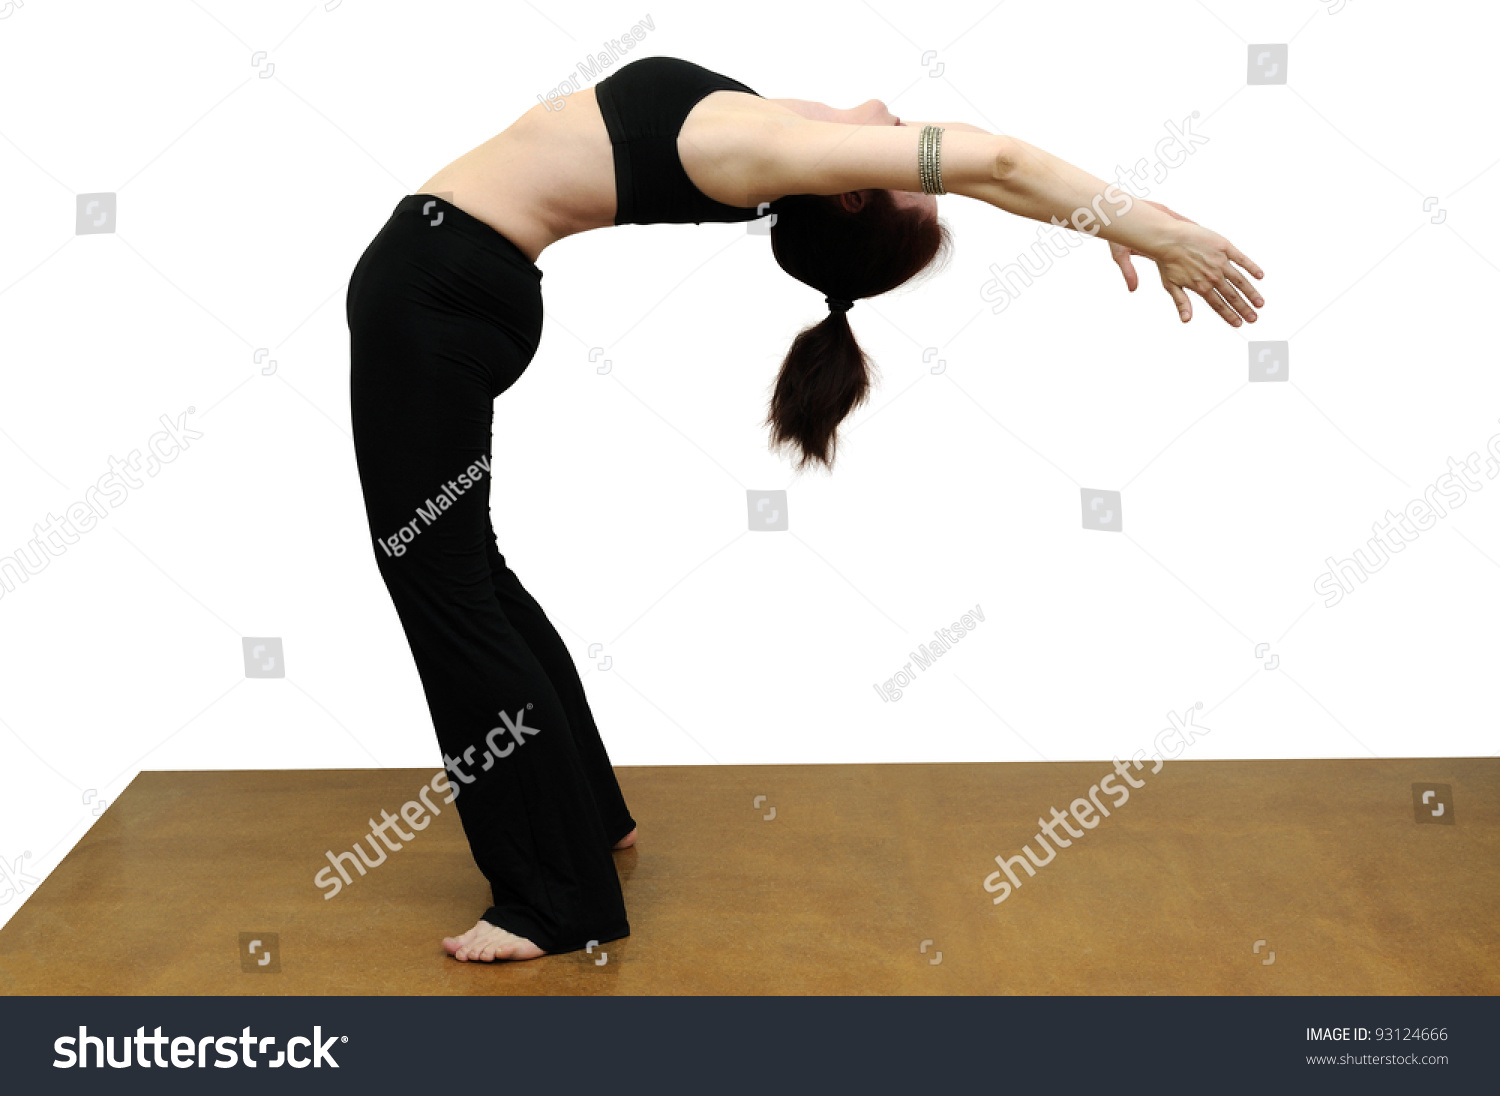 Woman Practicing Yoga Making Backbend On Stock Photo 93124666 ...